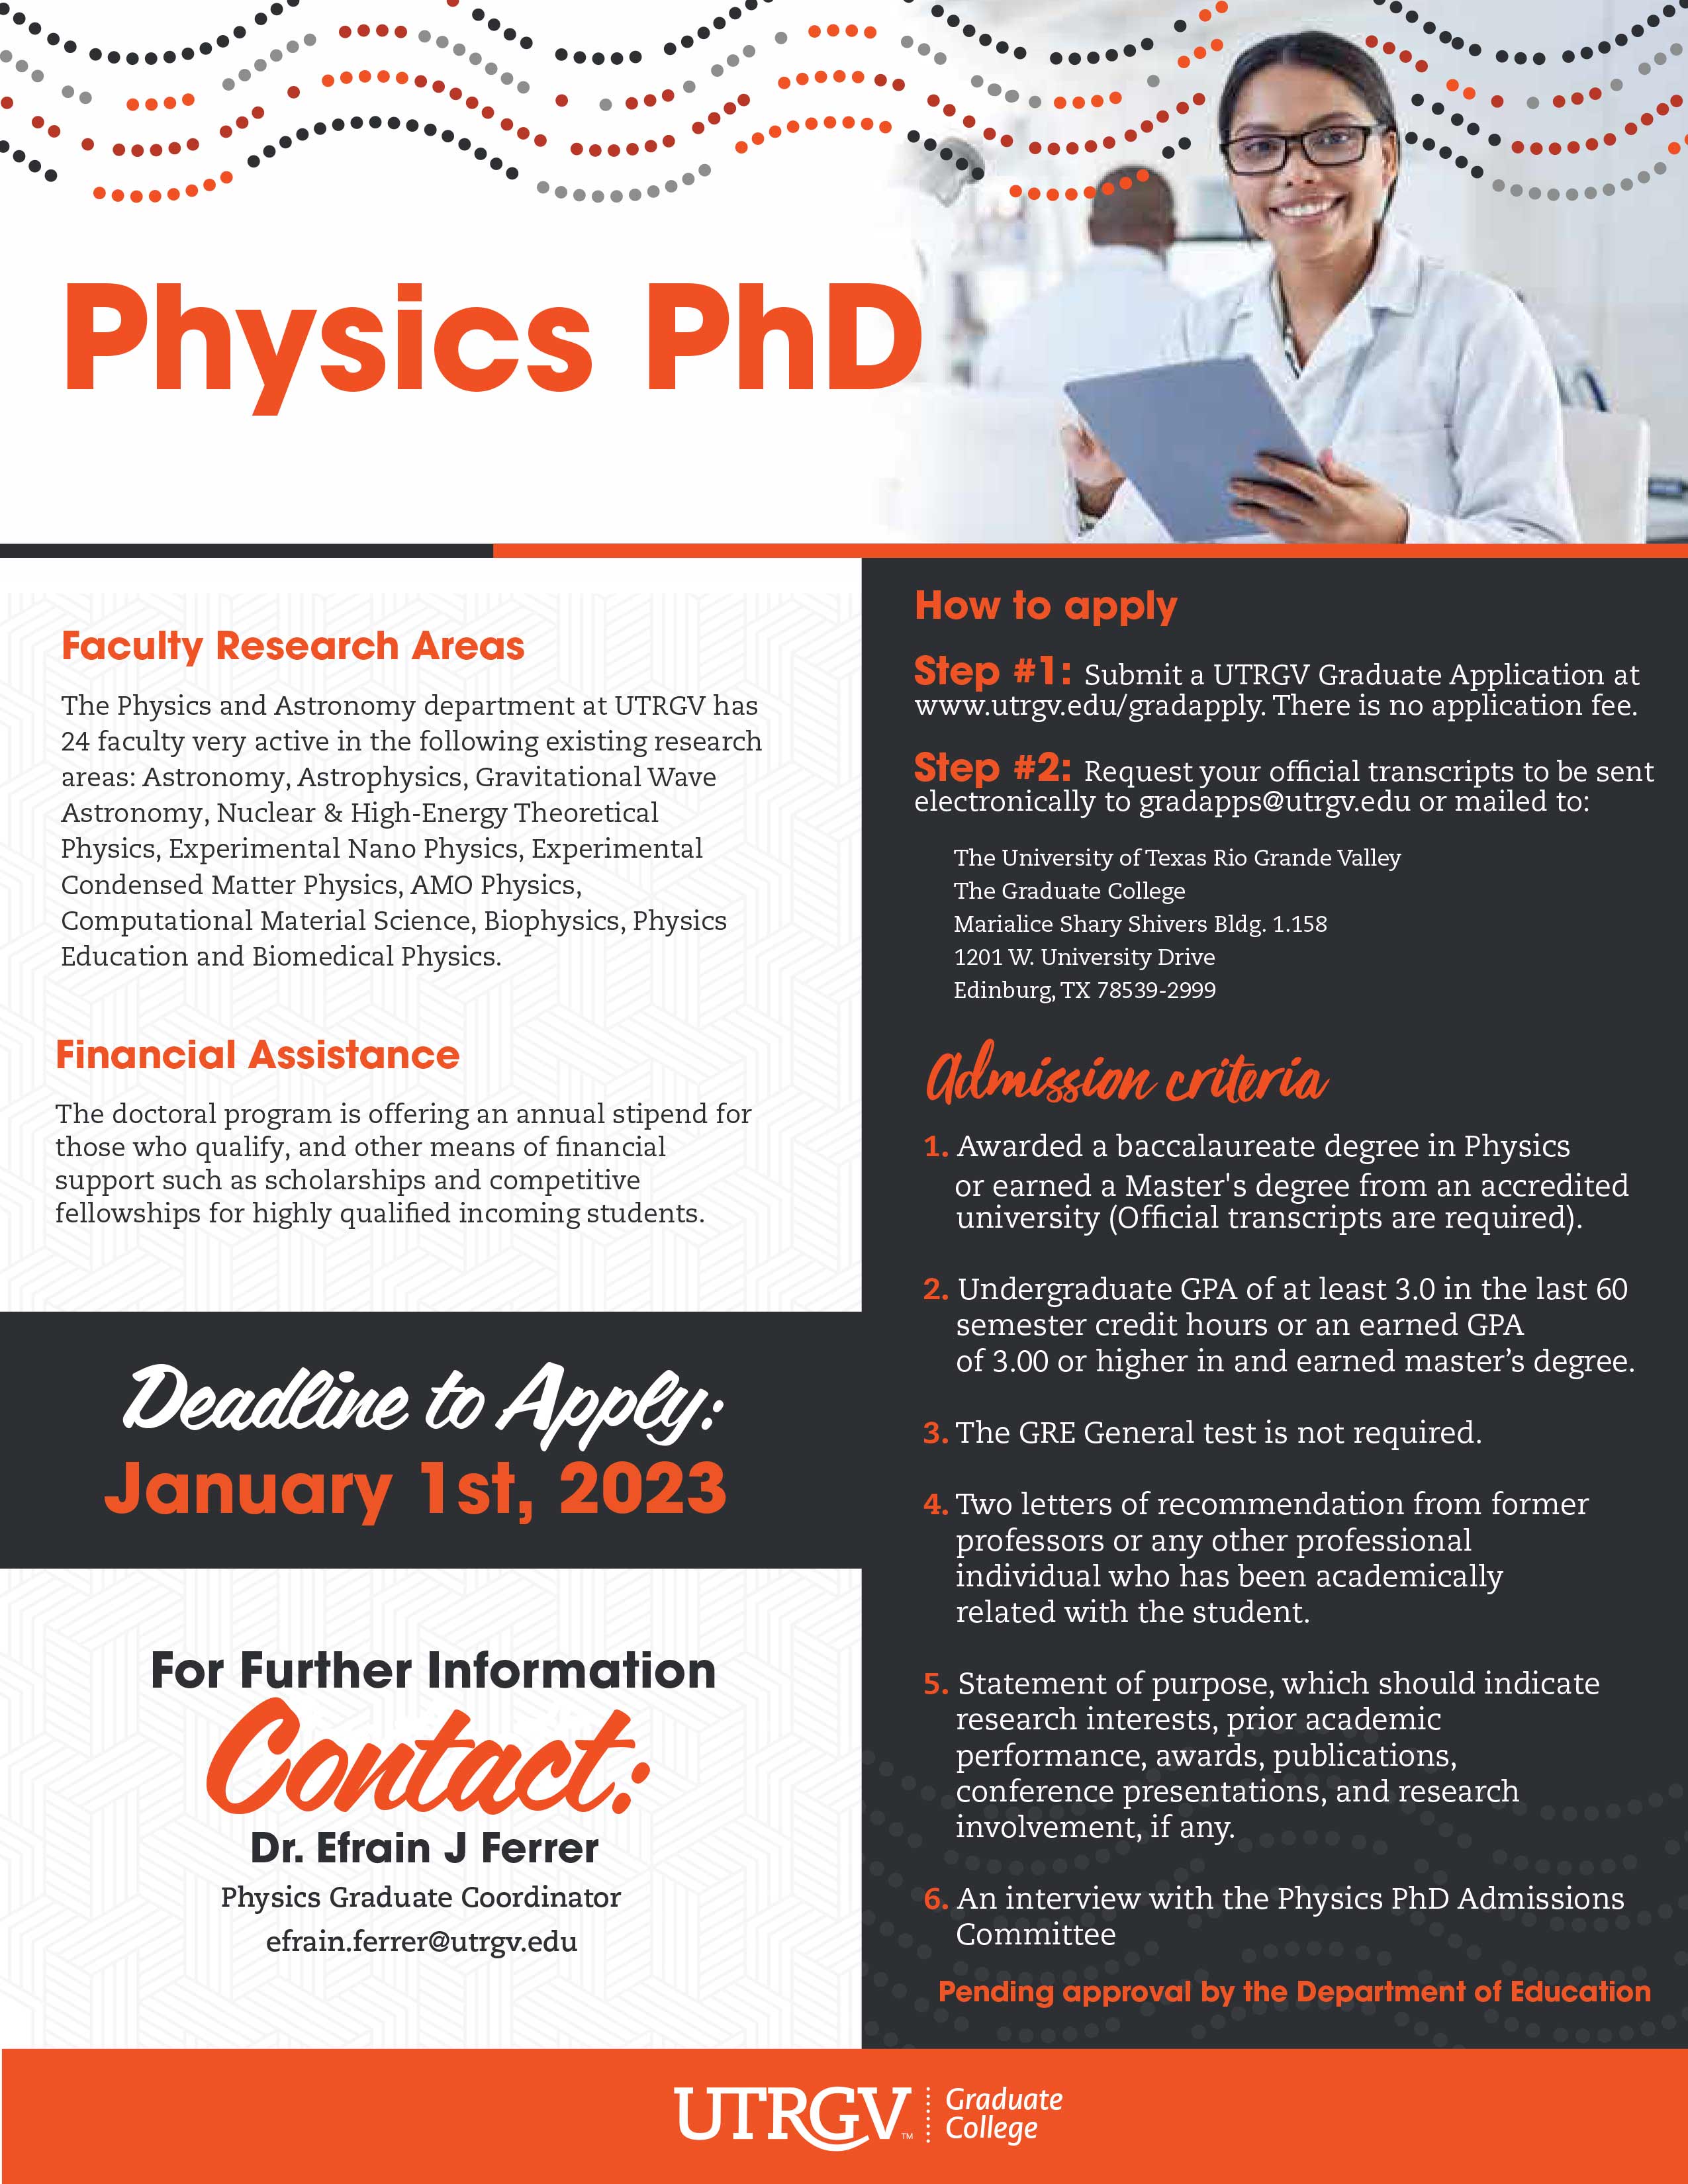 phd programs in physics